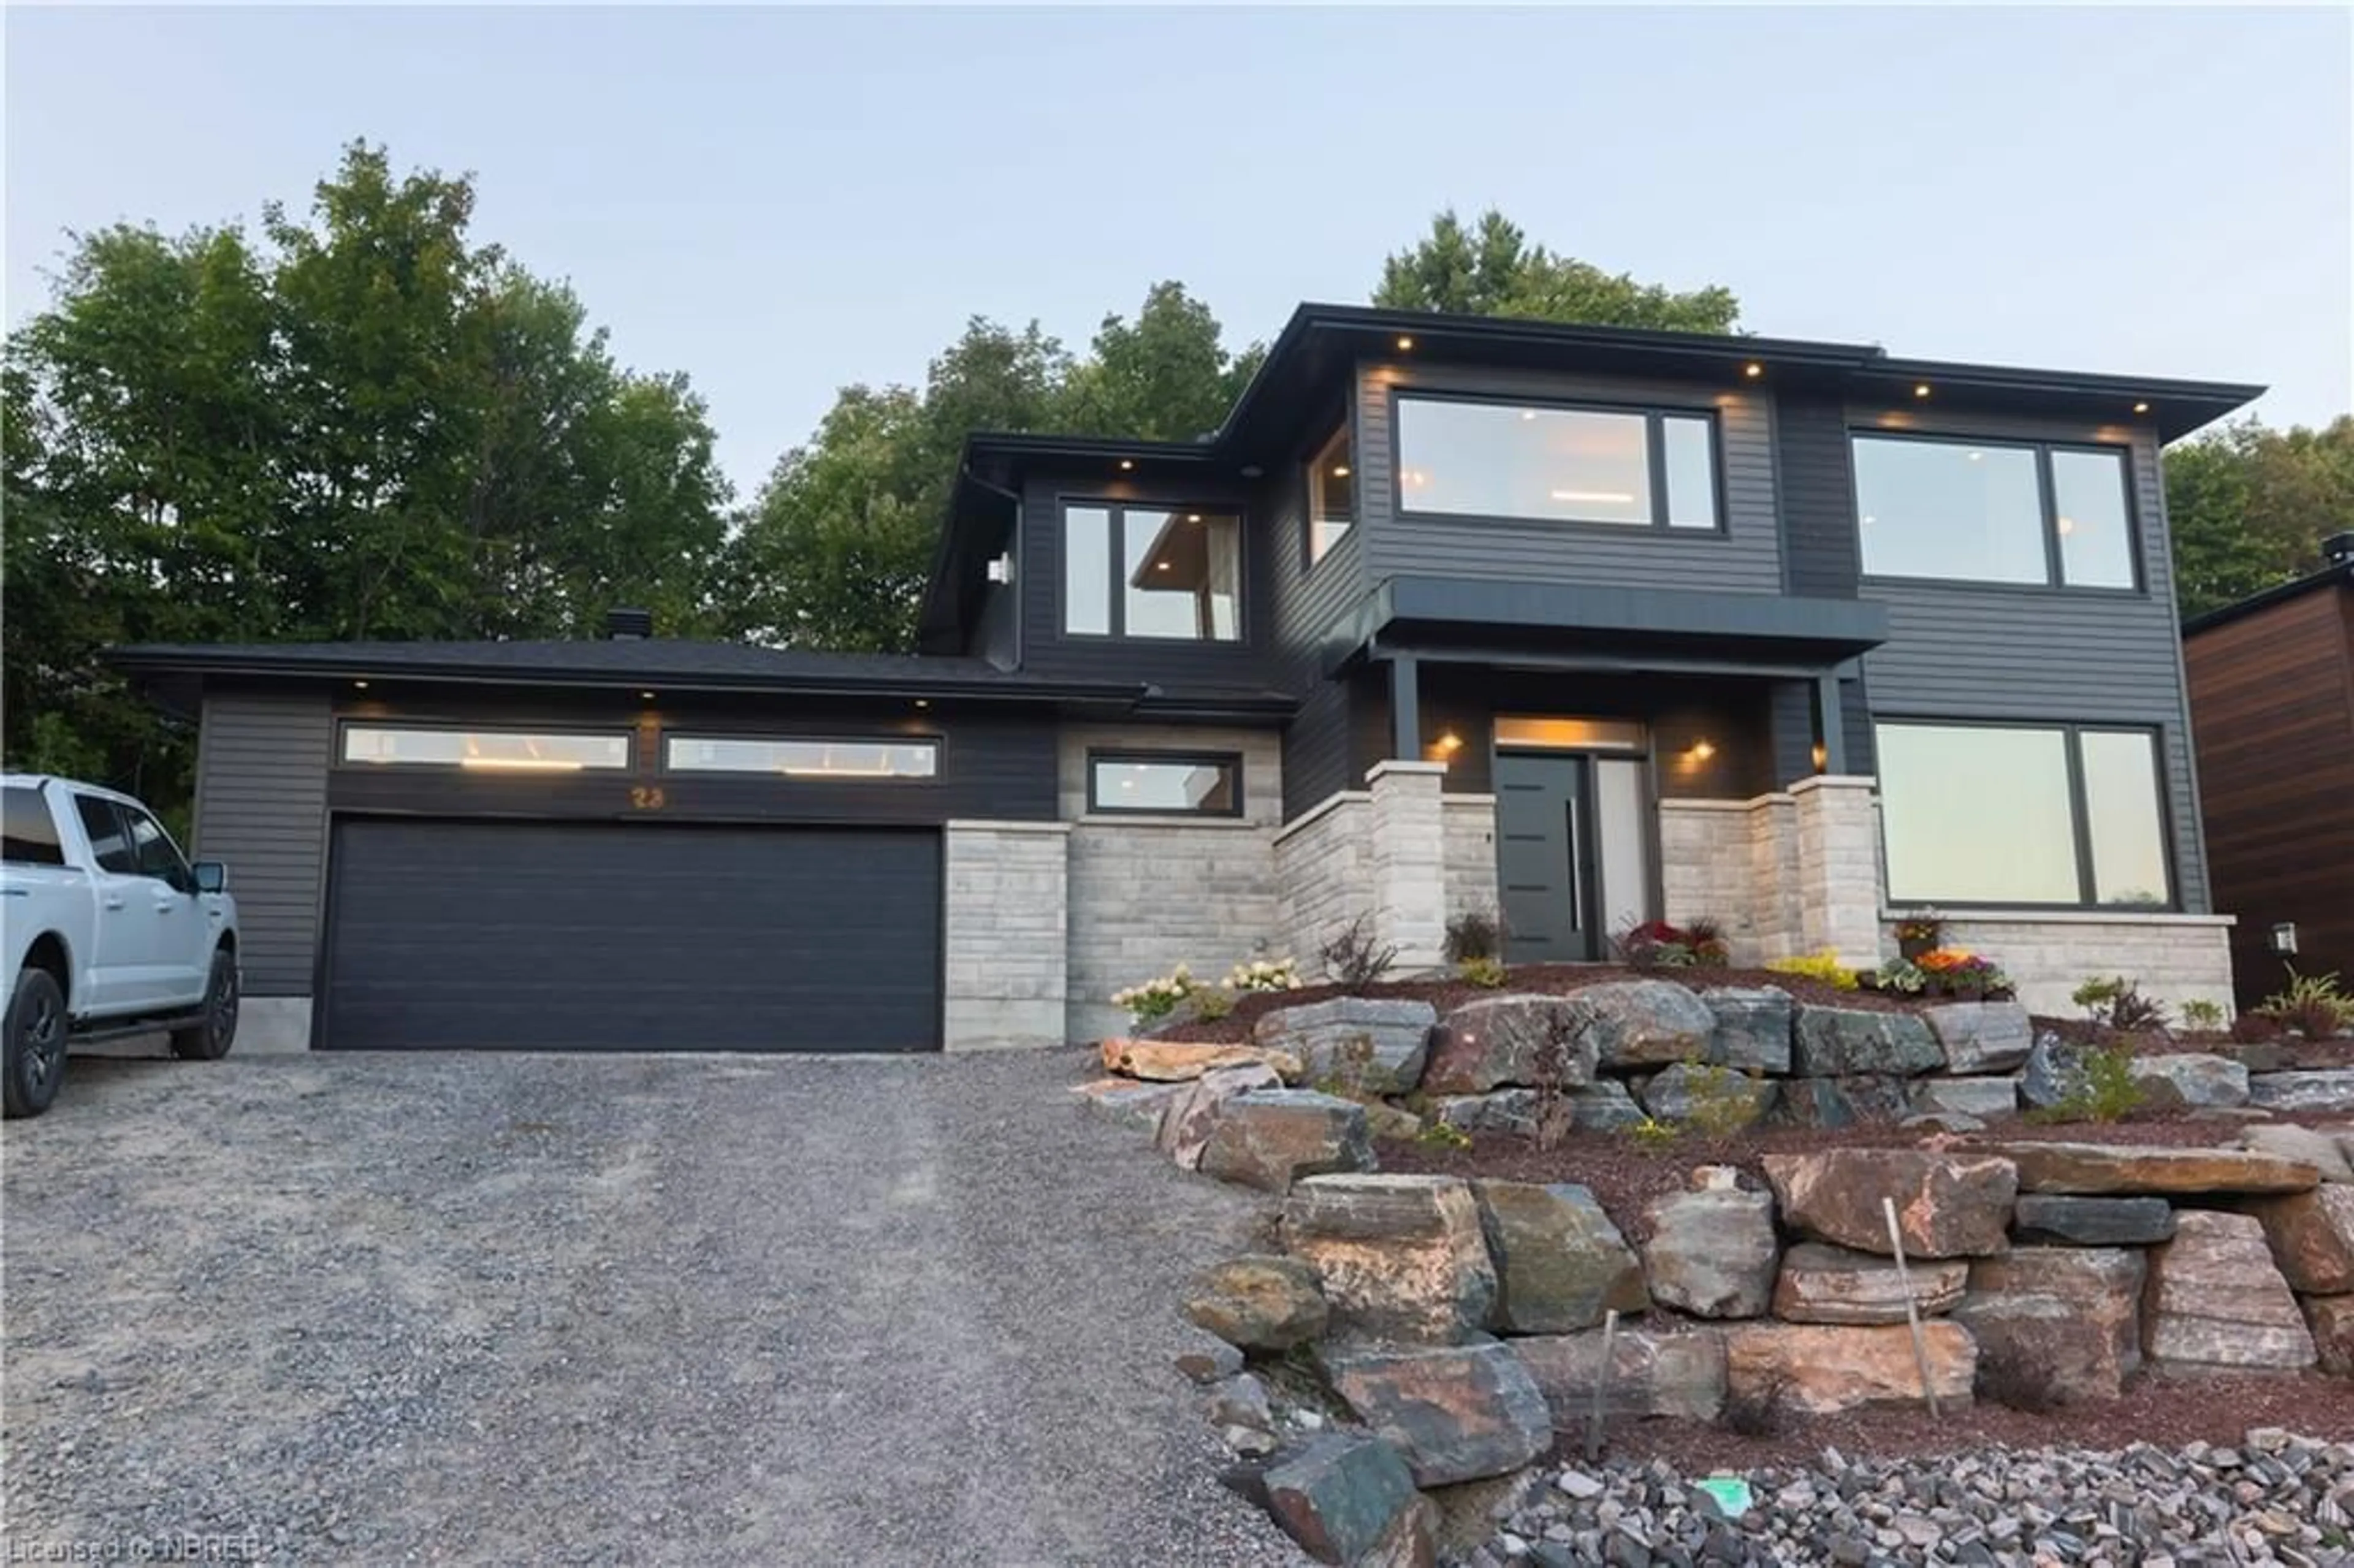 Home with brick exterior material for 23 Kenreta Dr, North Bay Ontario P1C 0A5